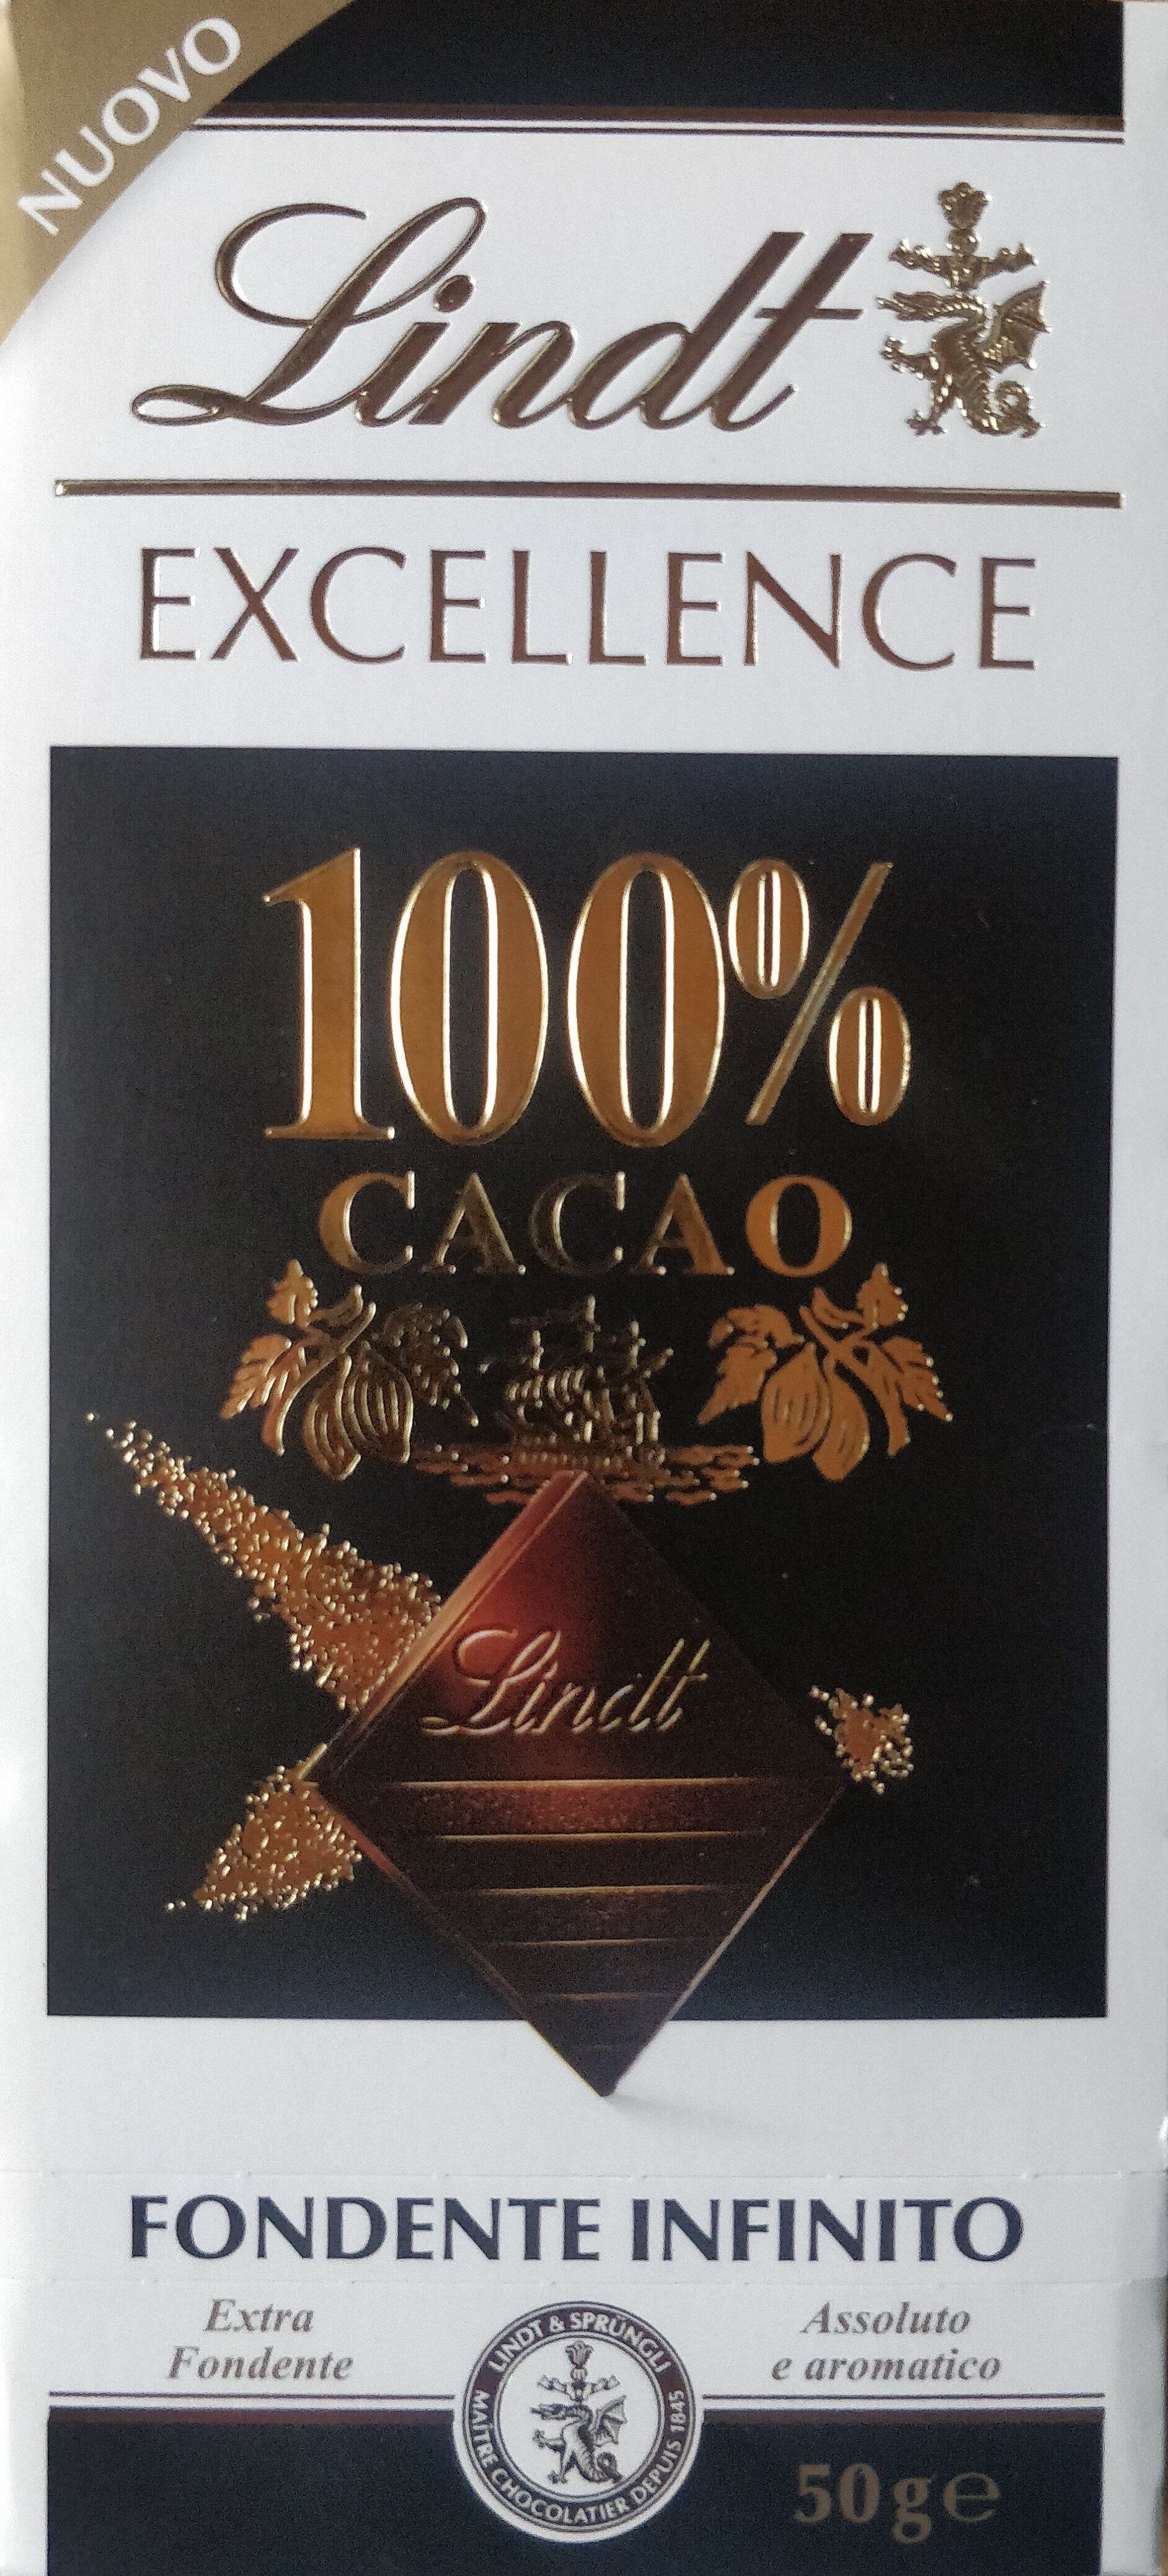 Fondente infinito 100% cacao - Producte - it